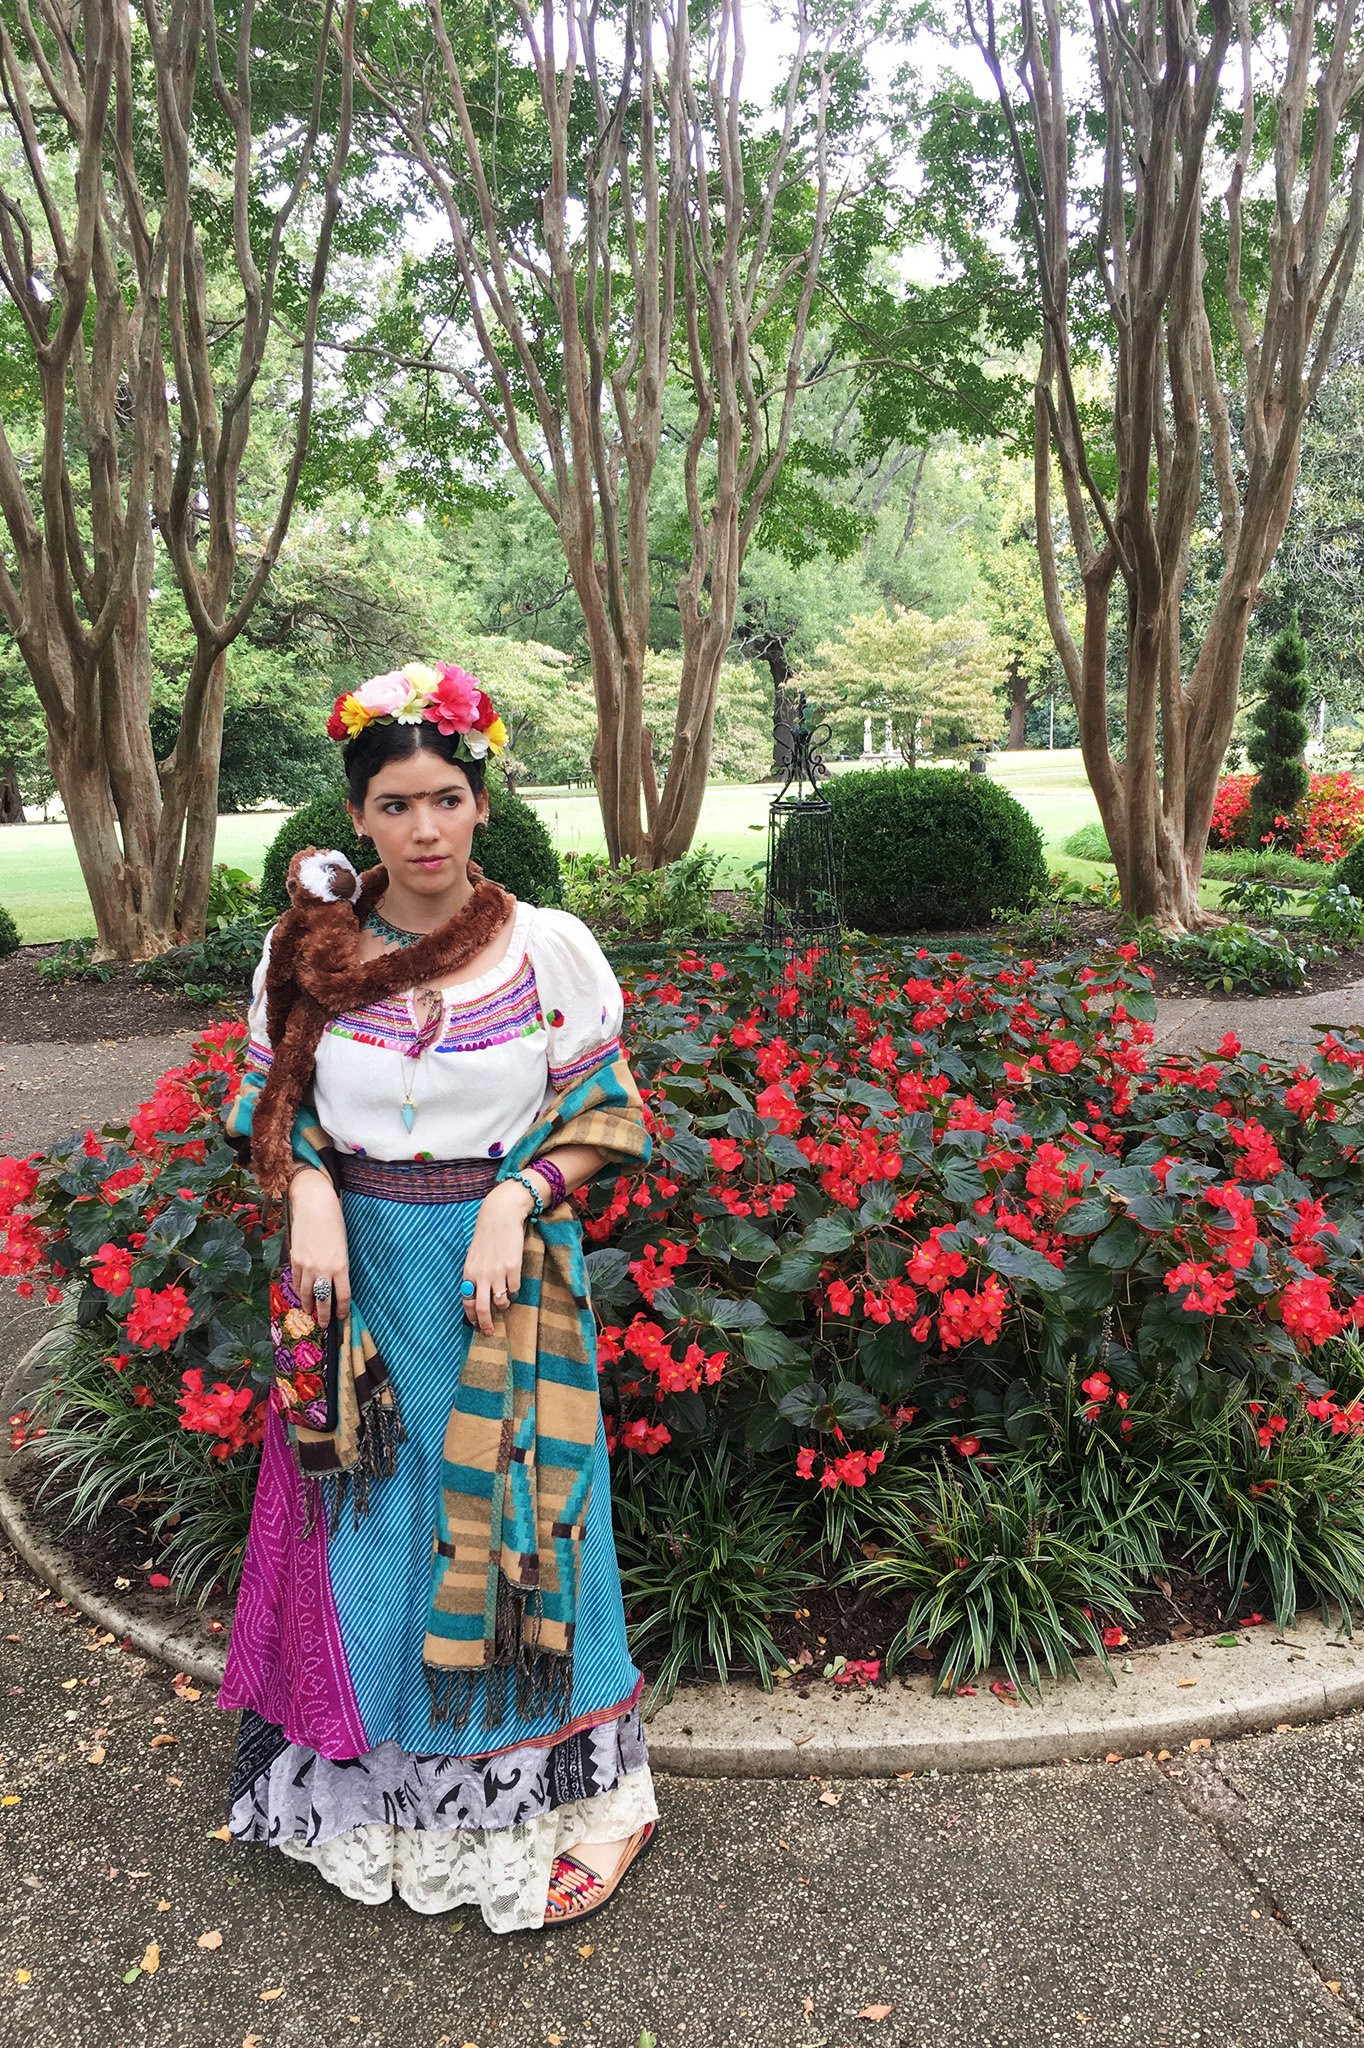 Best ideas about DIY Frida Kahlo Costume
. Save or Pin DIY Frida Kahlo Costume Now.